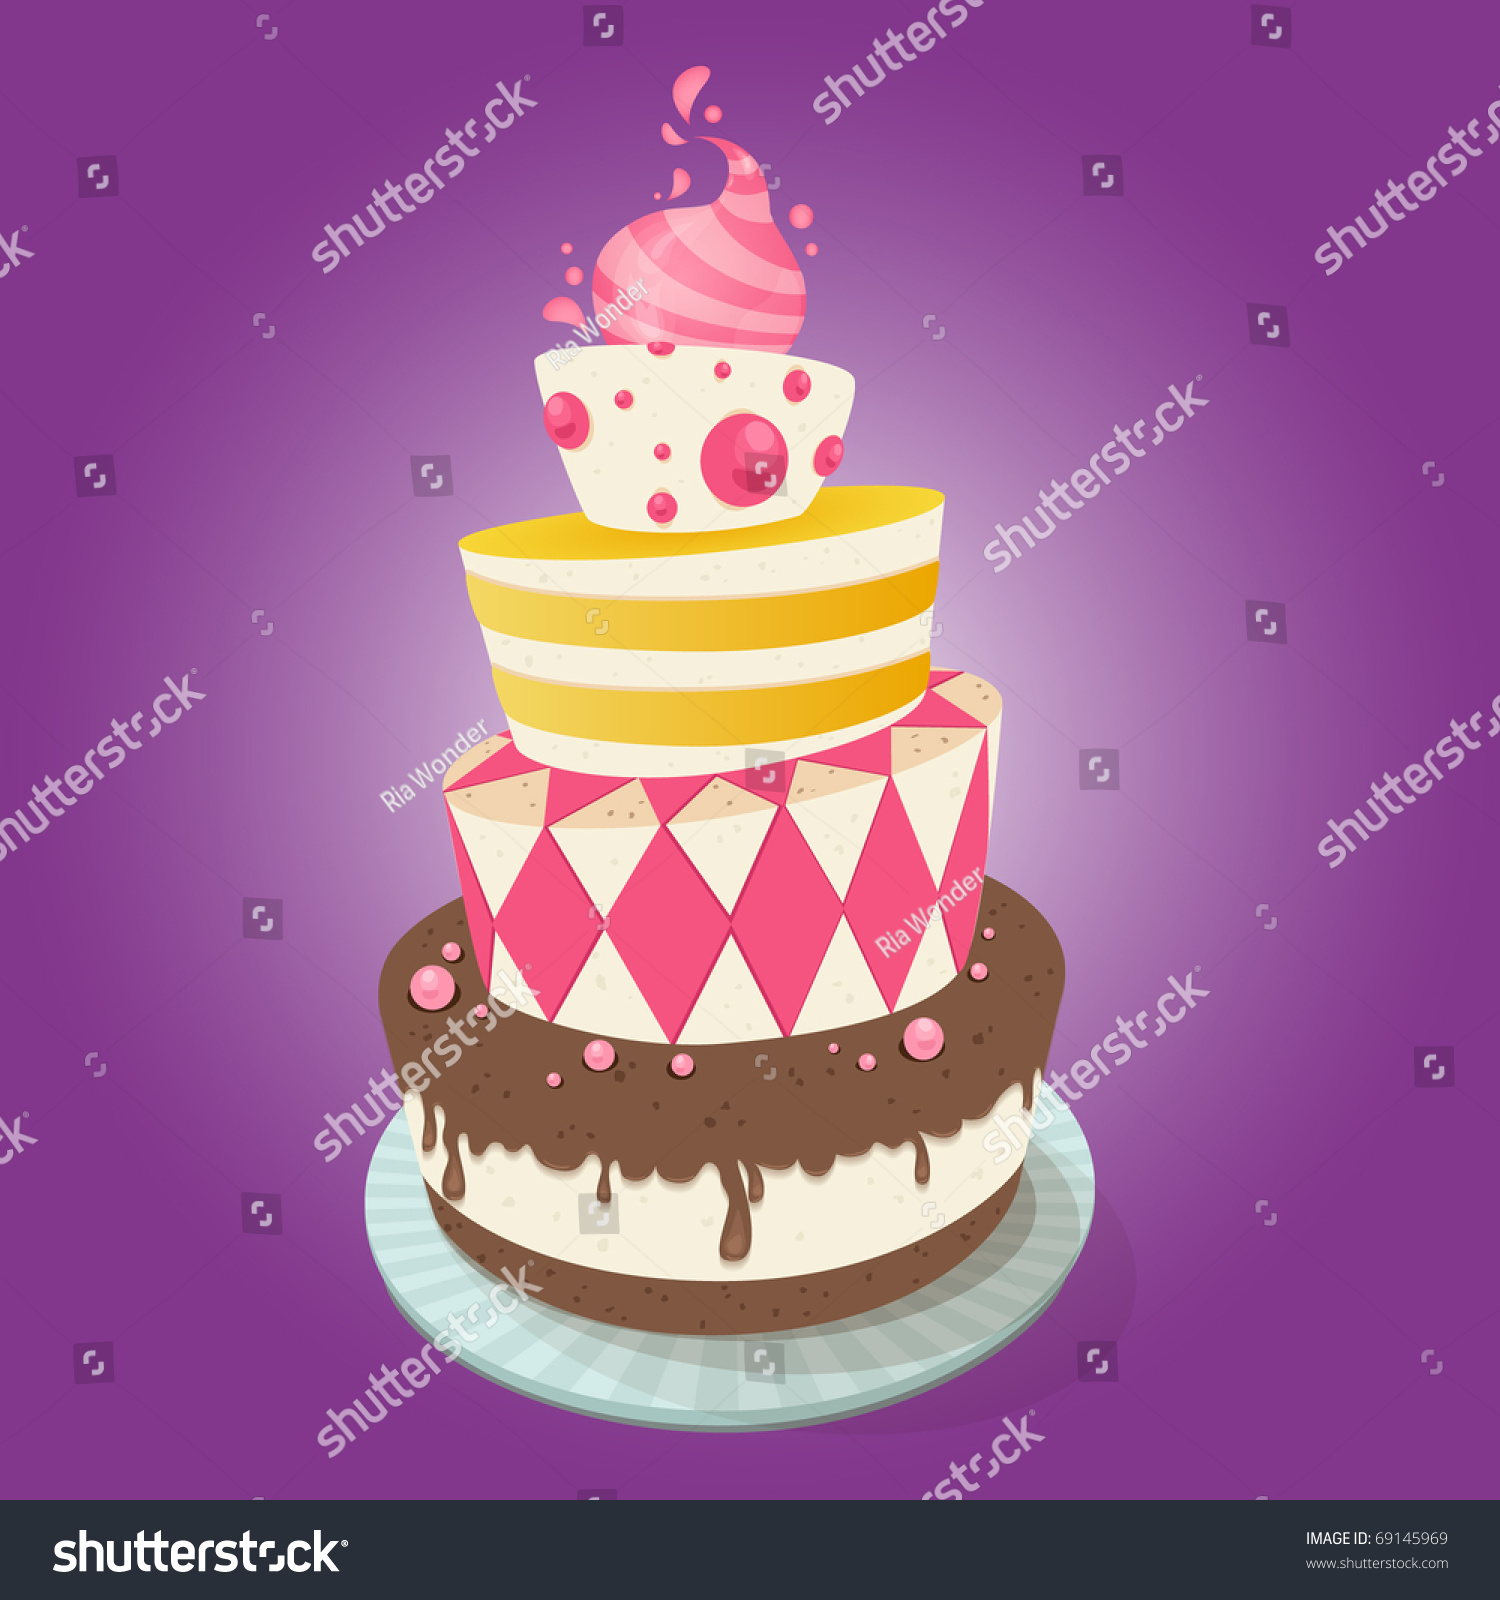 Birthday Cake Stock Vector Illustration 69145969 : Shutterstock